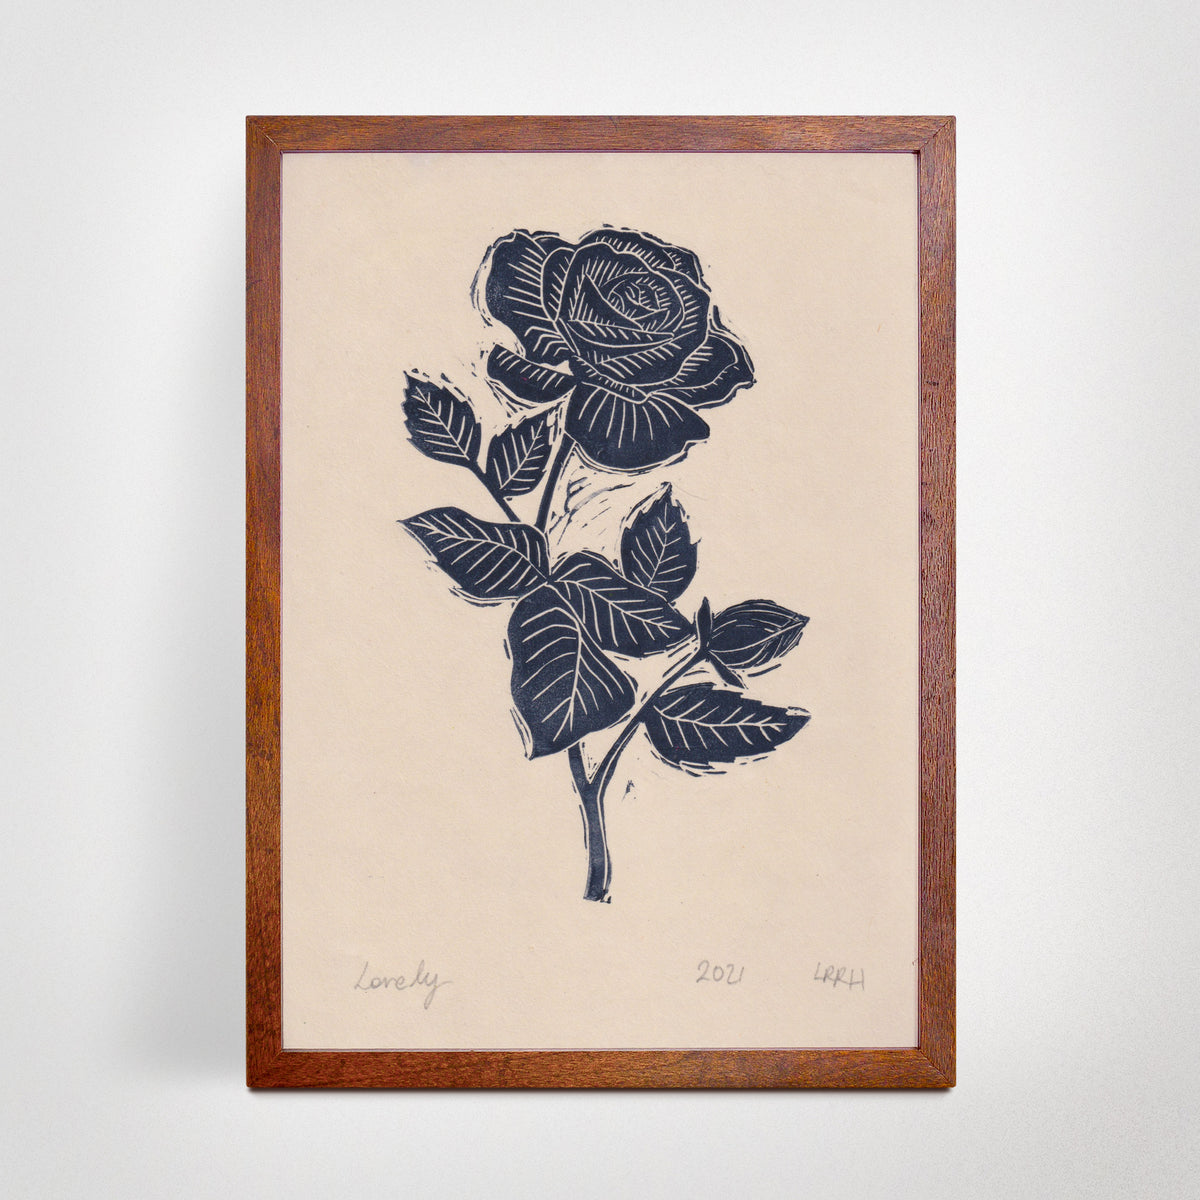 Lovely - Original Linoprint